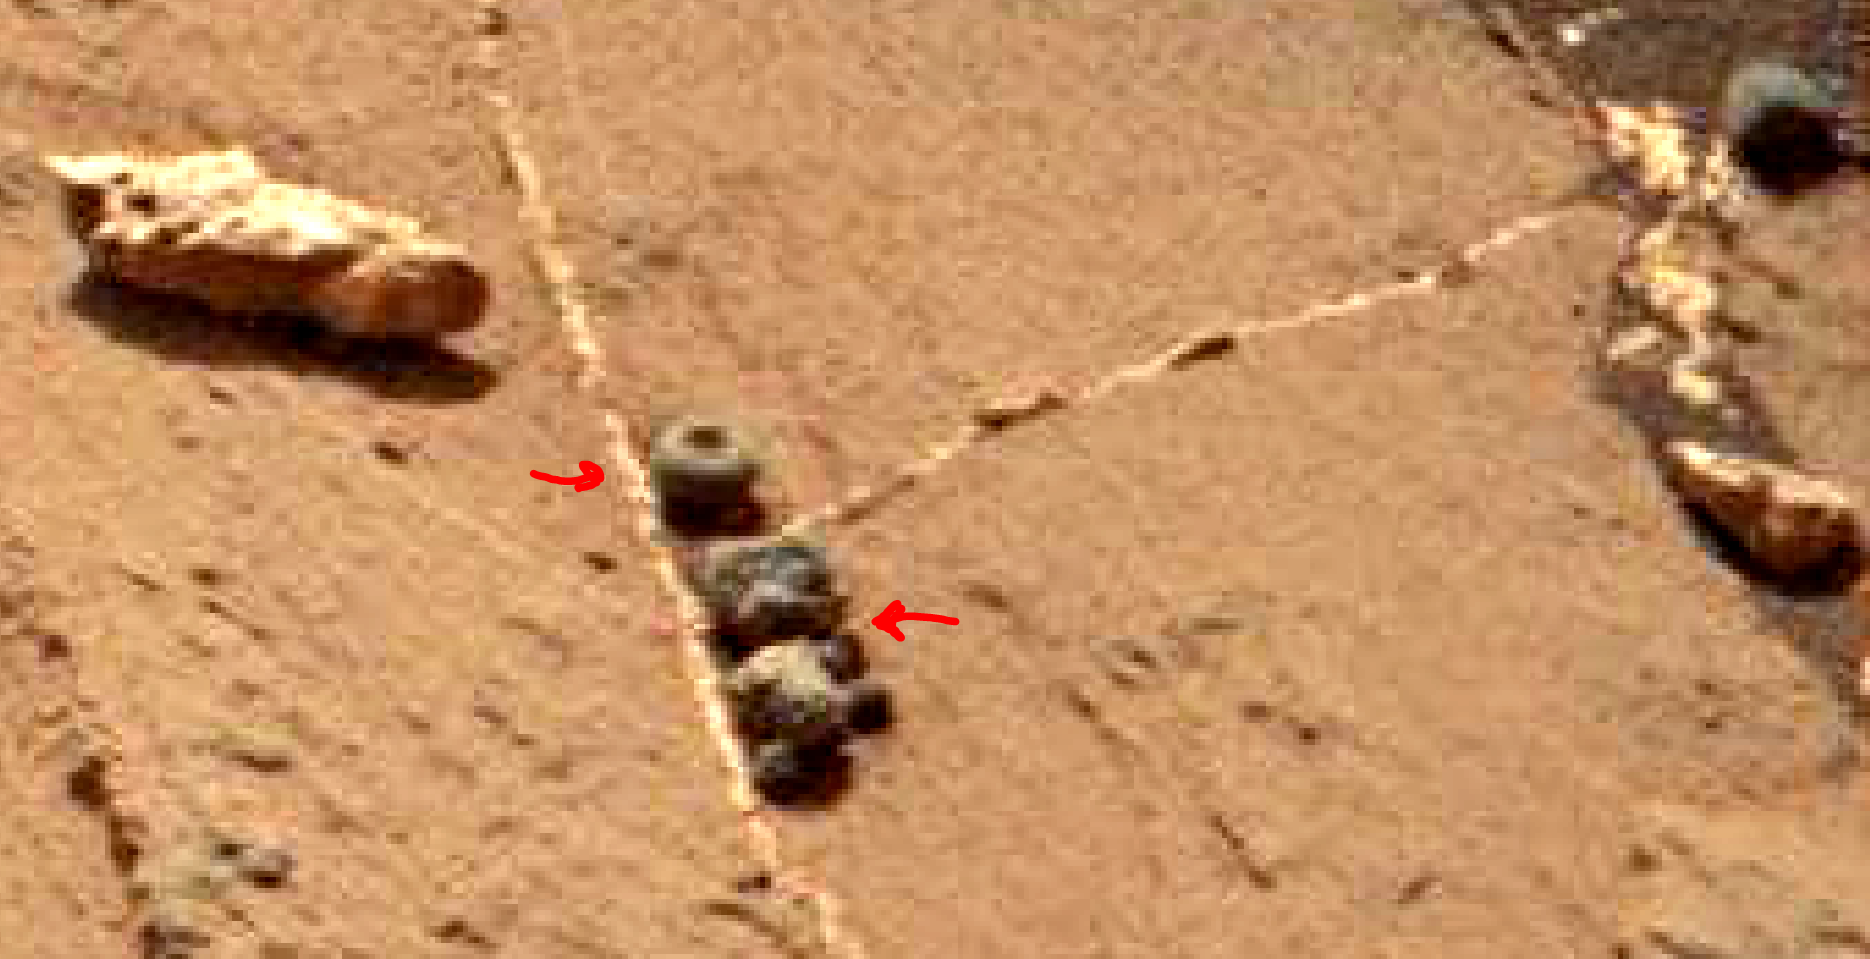 Mars anomalies - small baby creature 